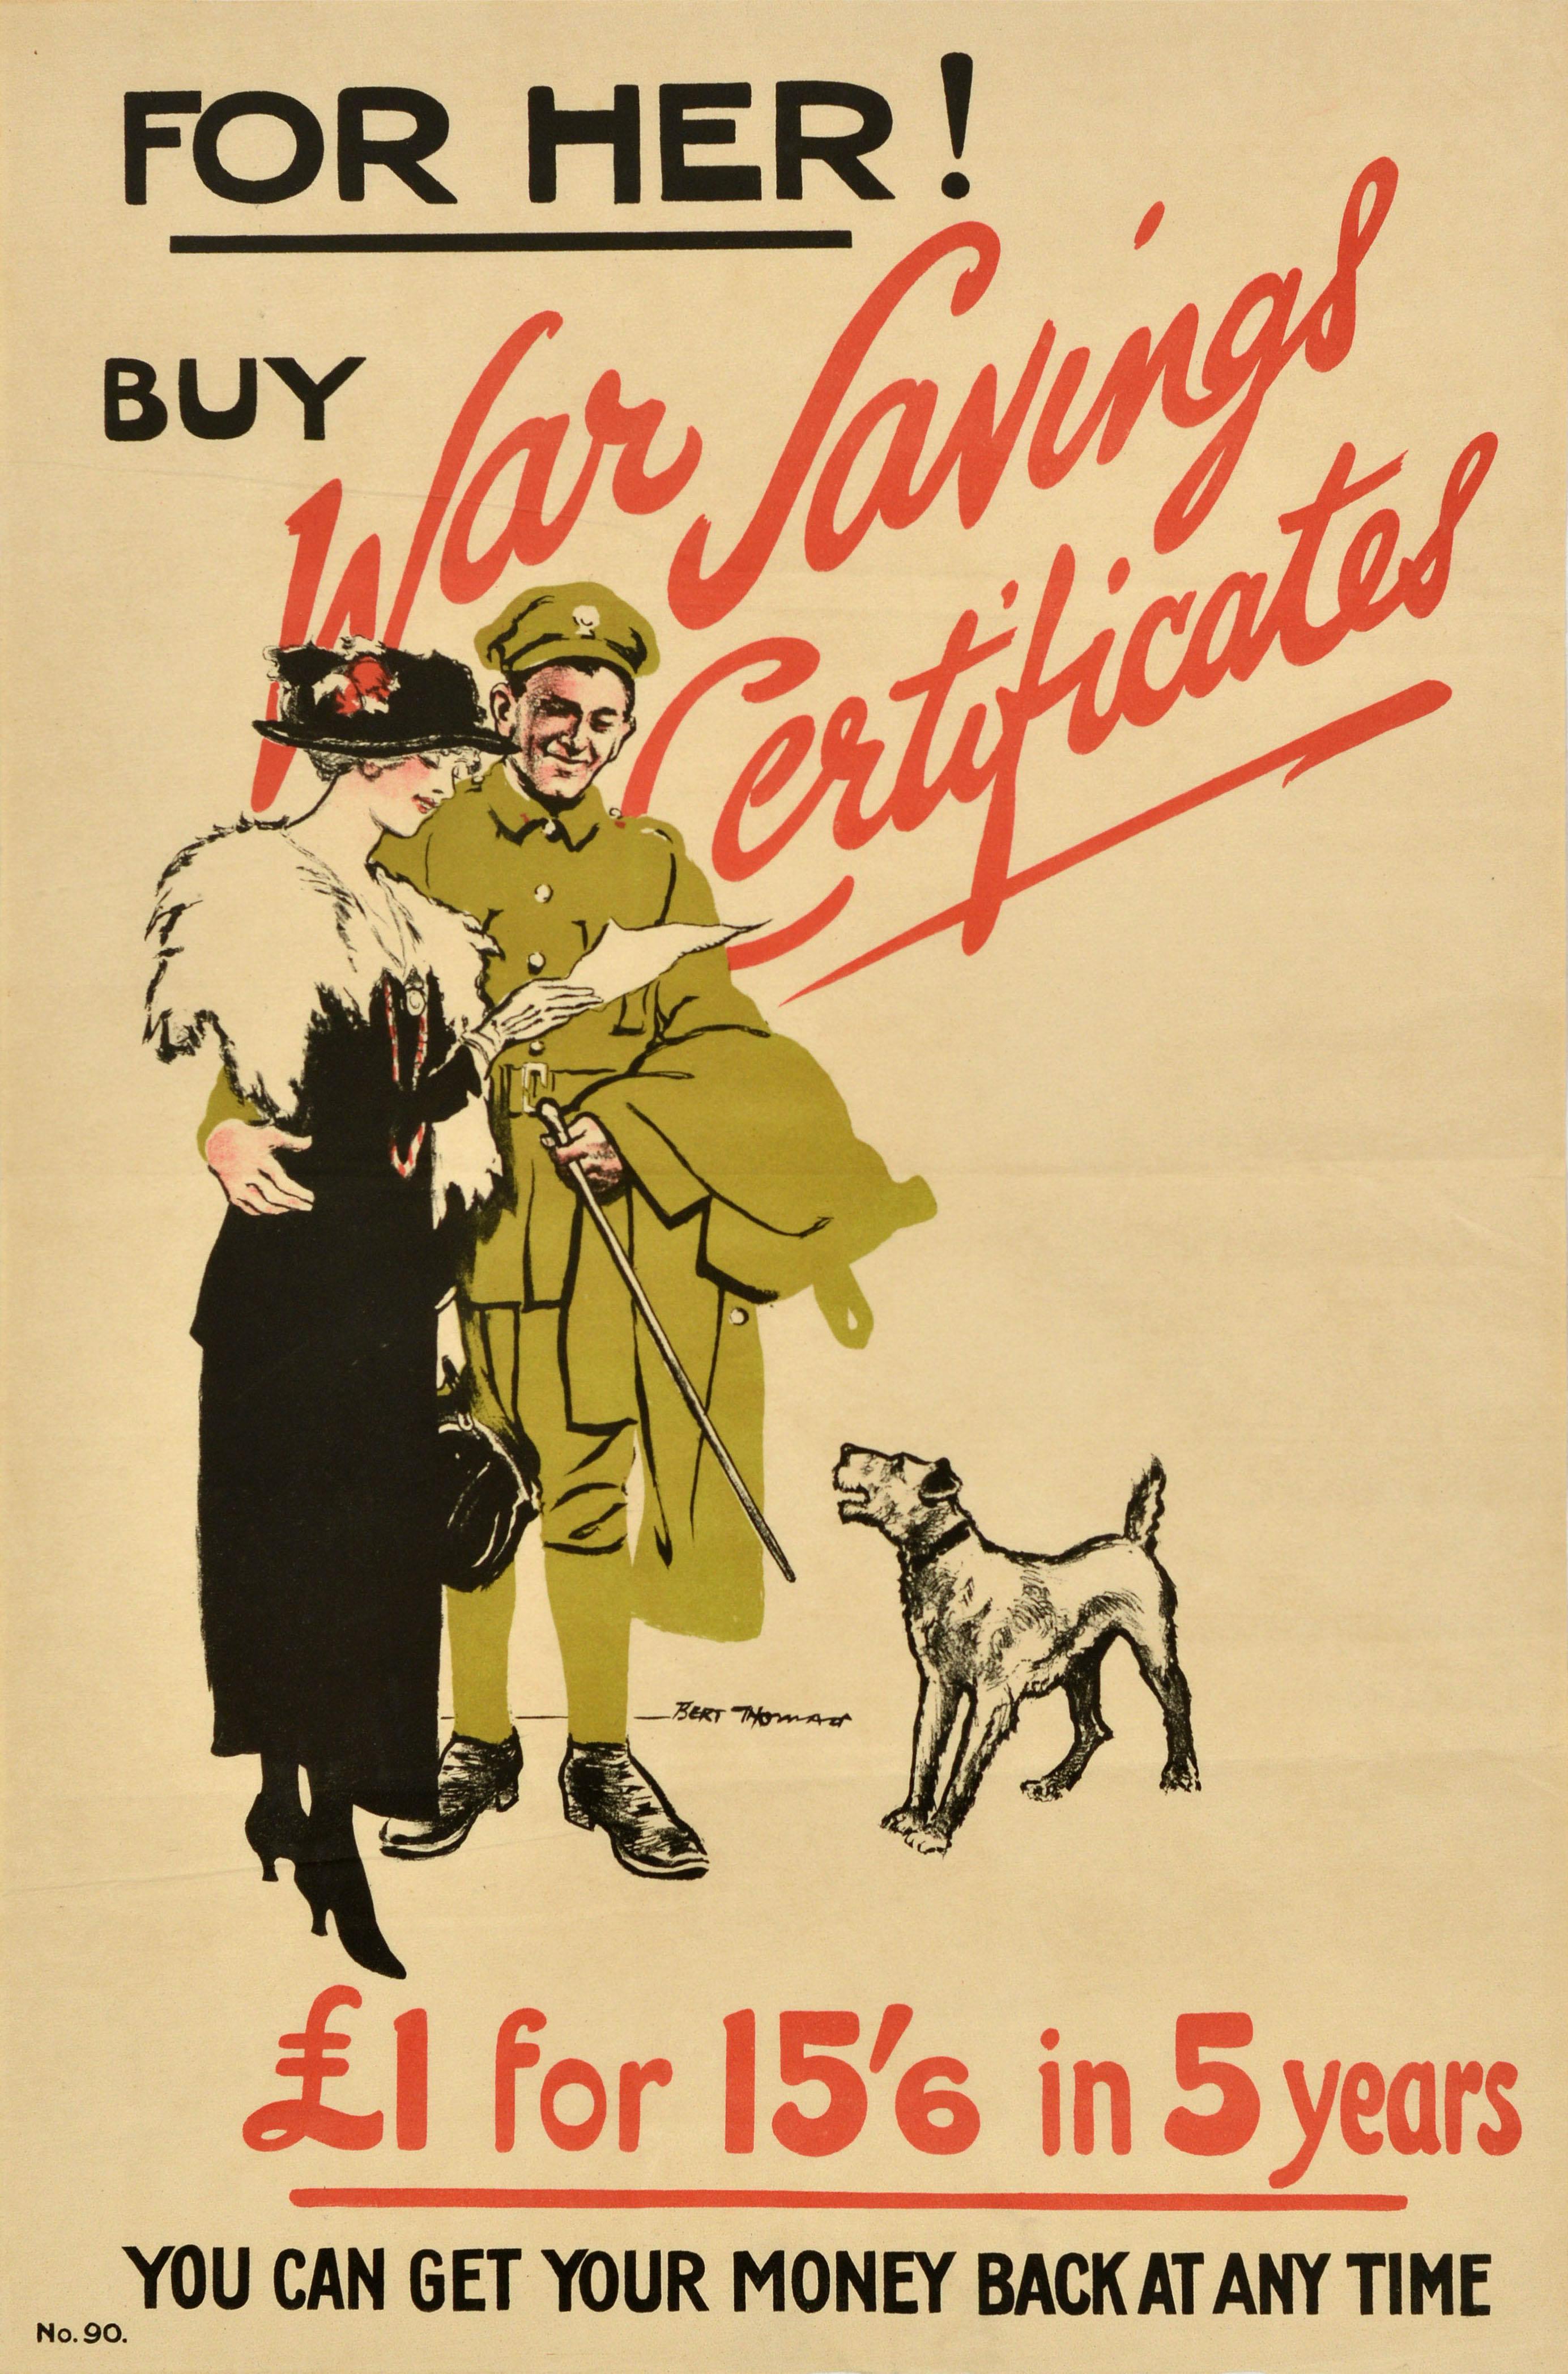 Unknown Print - Original Antique War Bonds Poster War Savings Certificates Buy For Her WWI